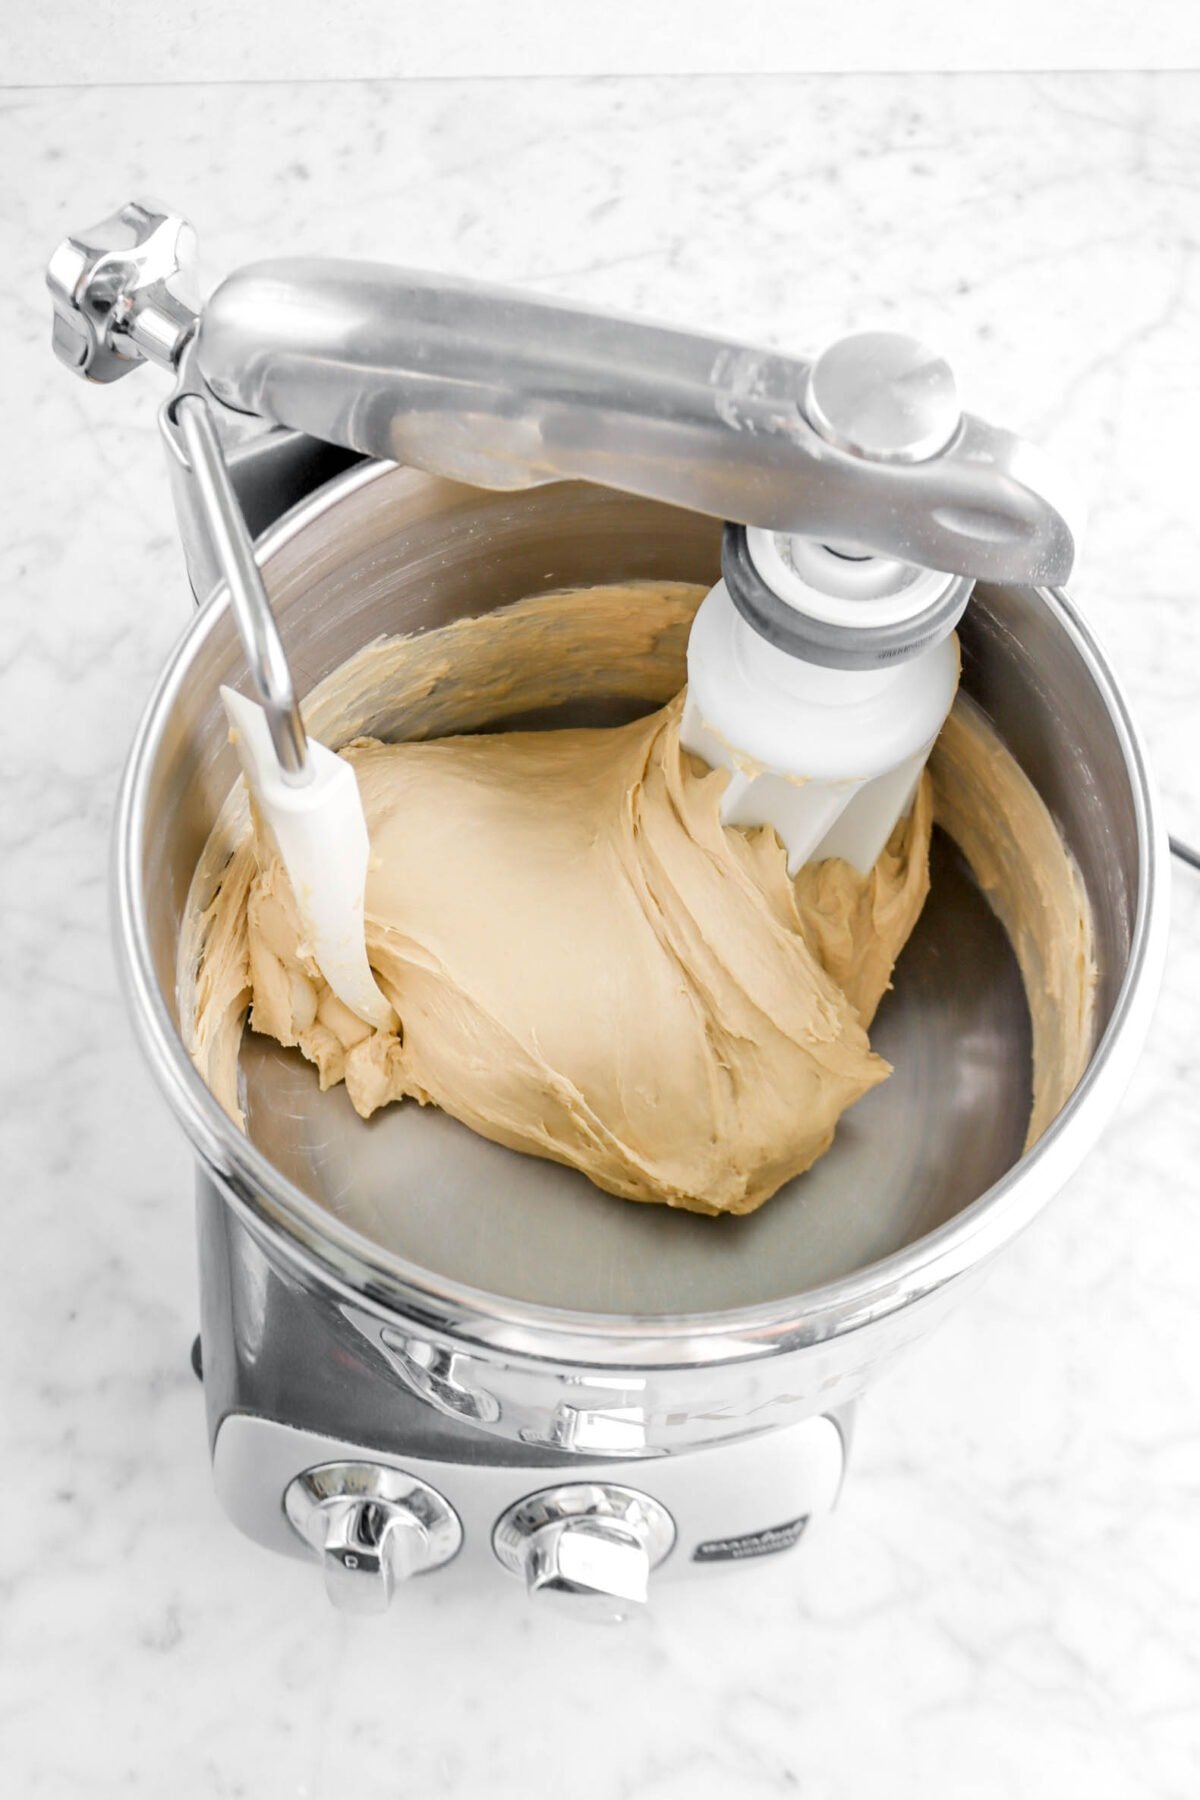 dough in mixer bowl